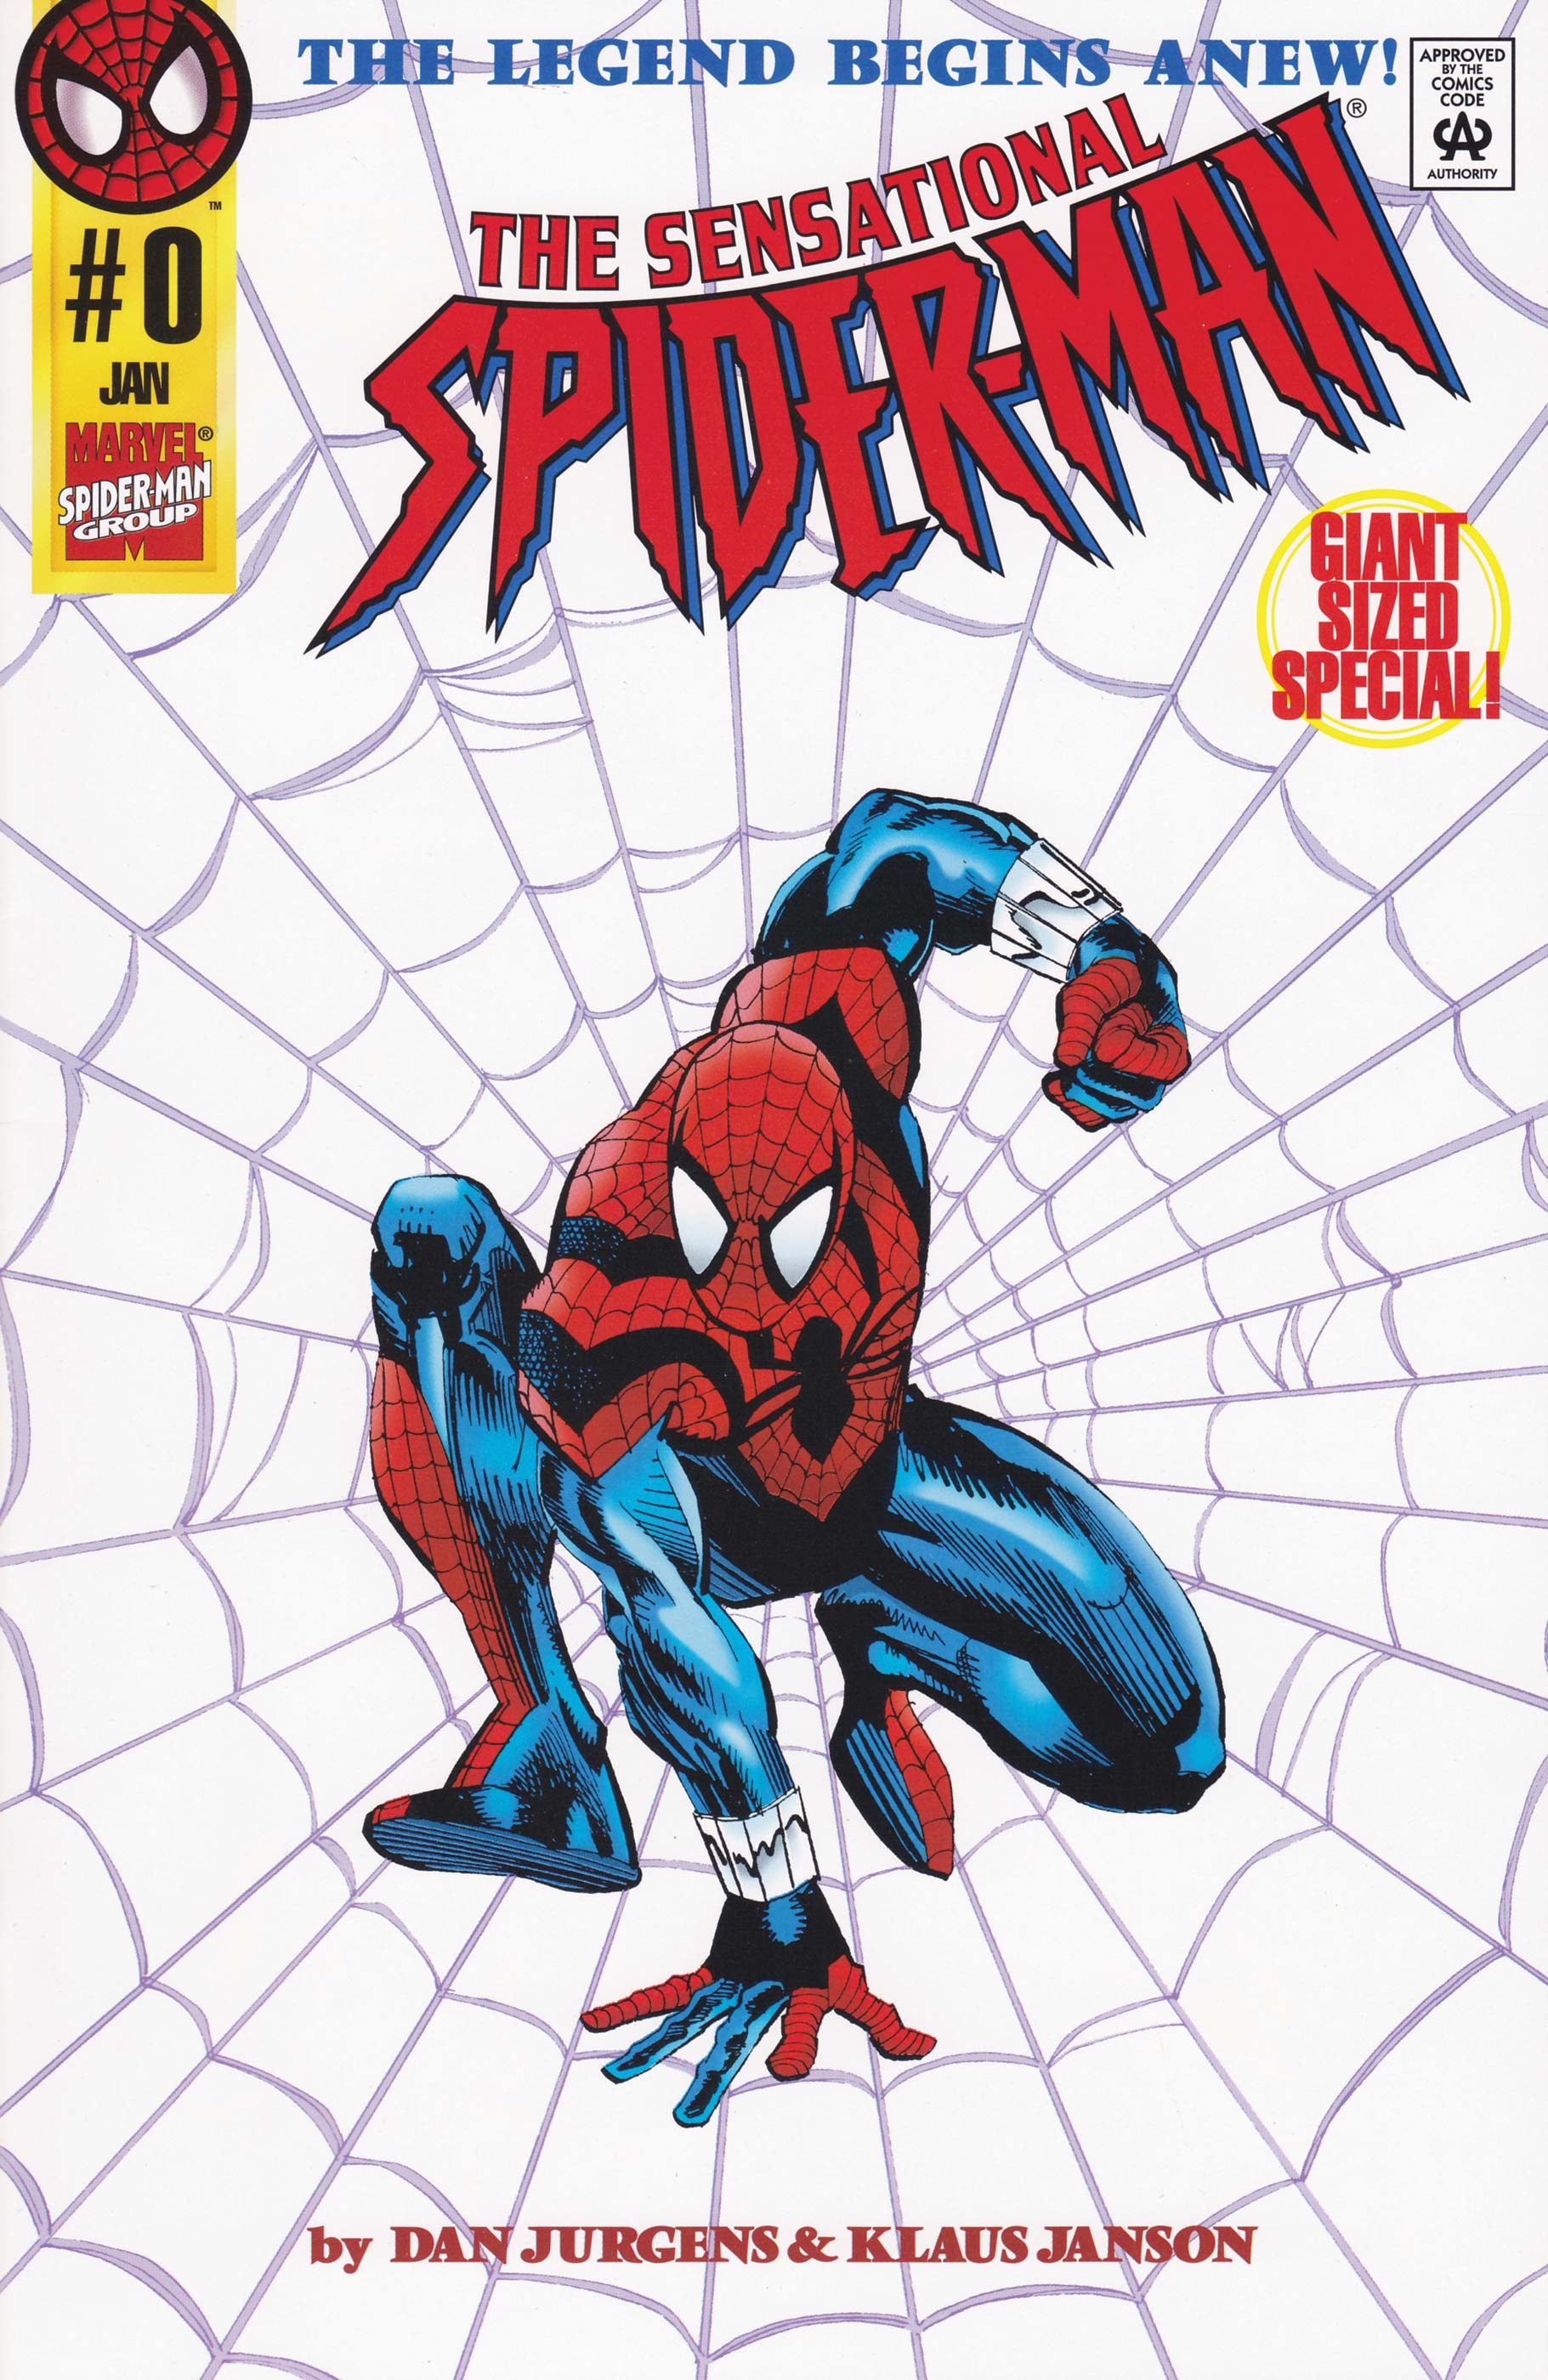 Sensational spiderman